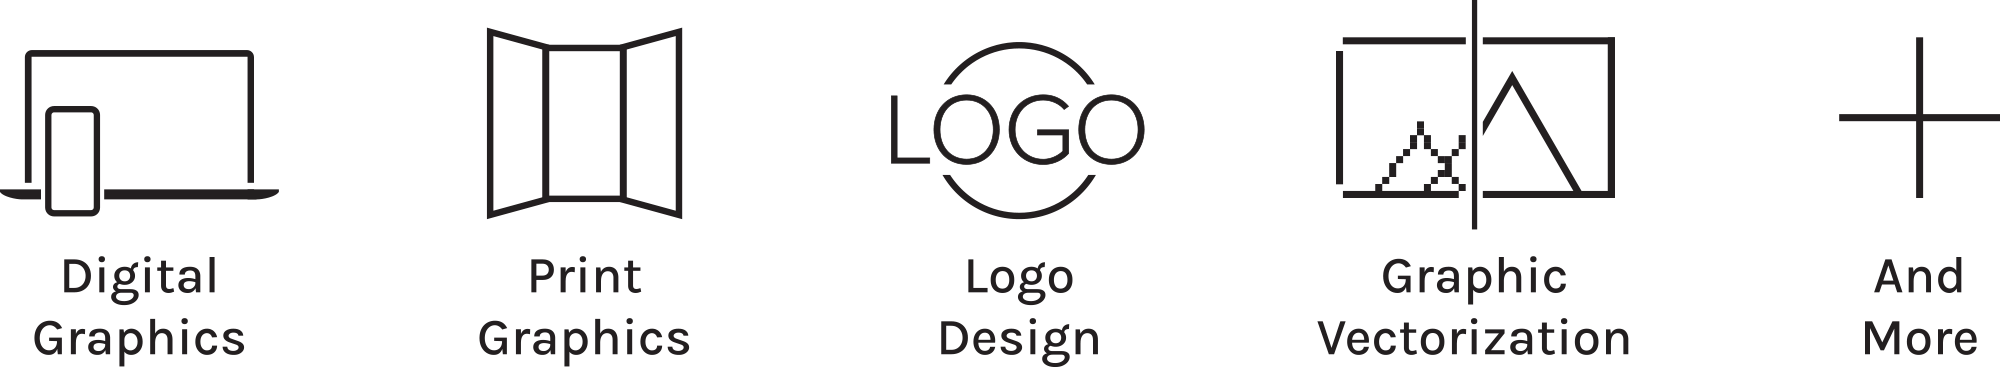 Digital Graphics - Print Graphics - Logo Design - Graphic Vectorization - And More